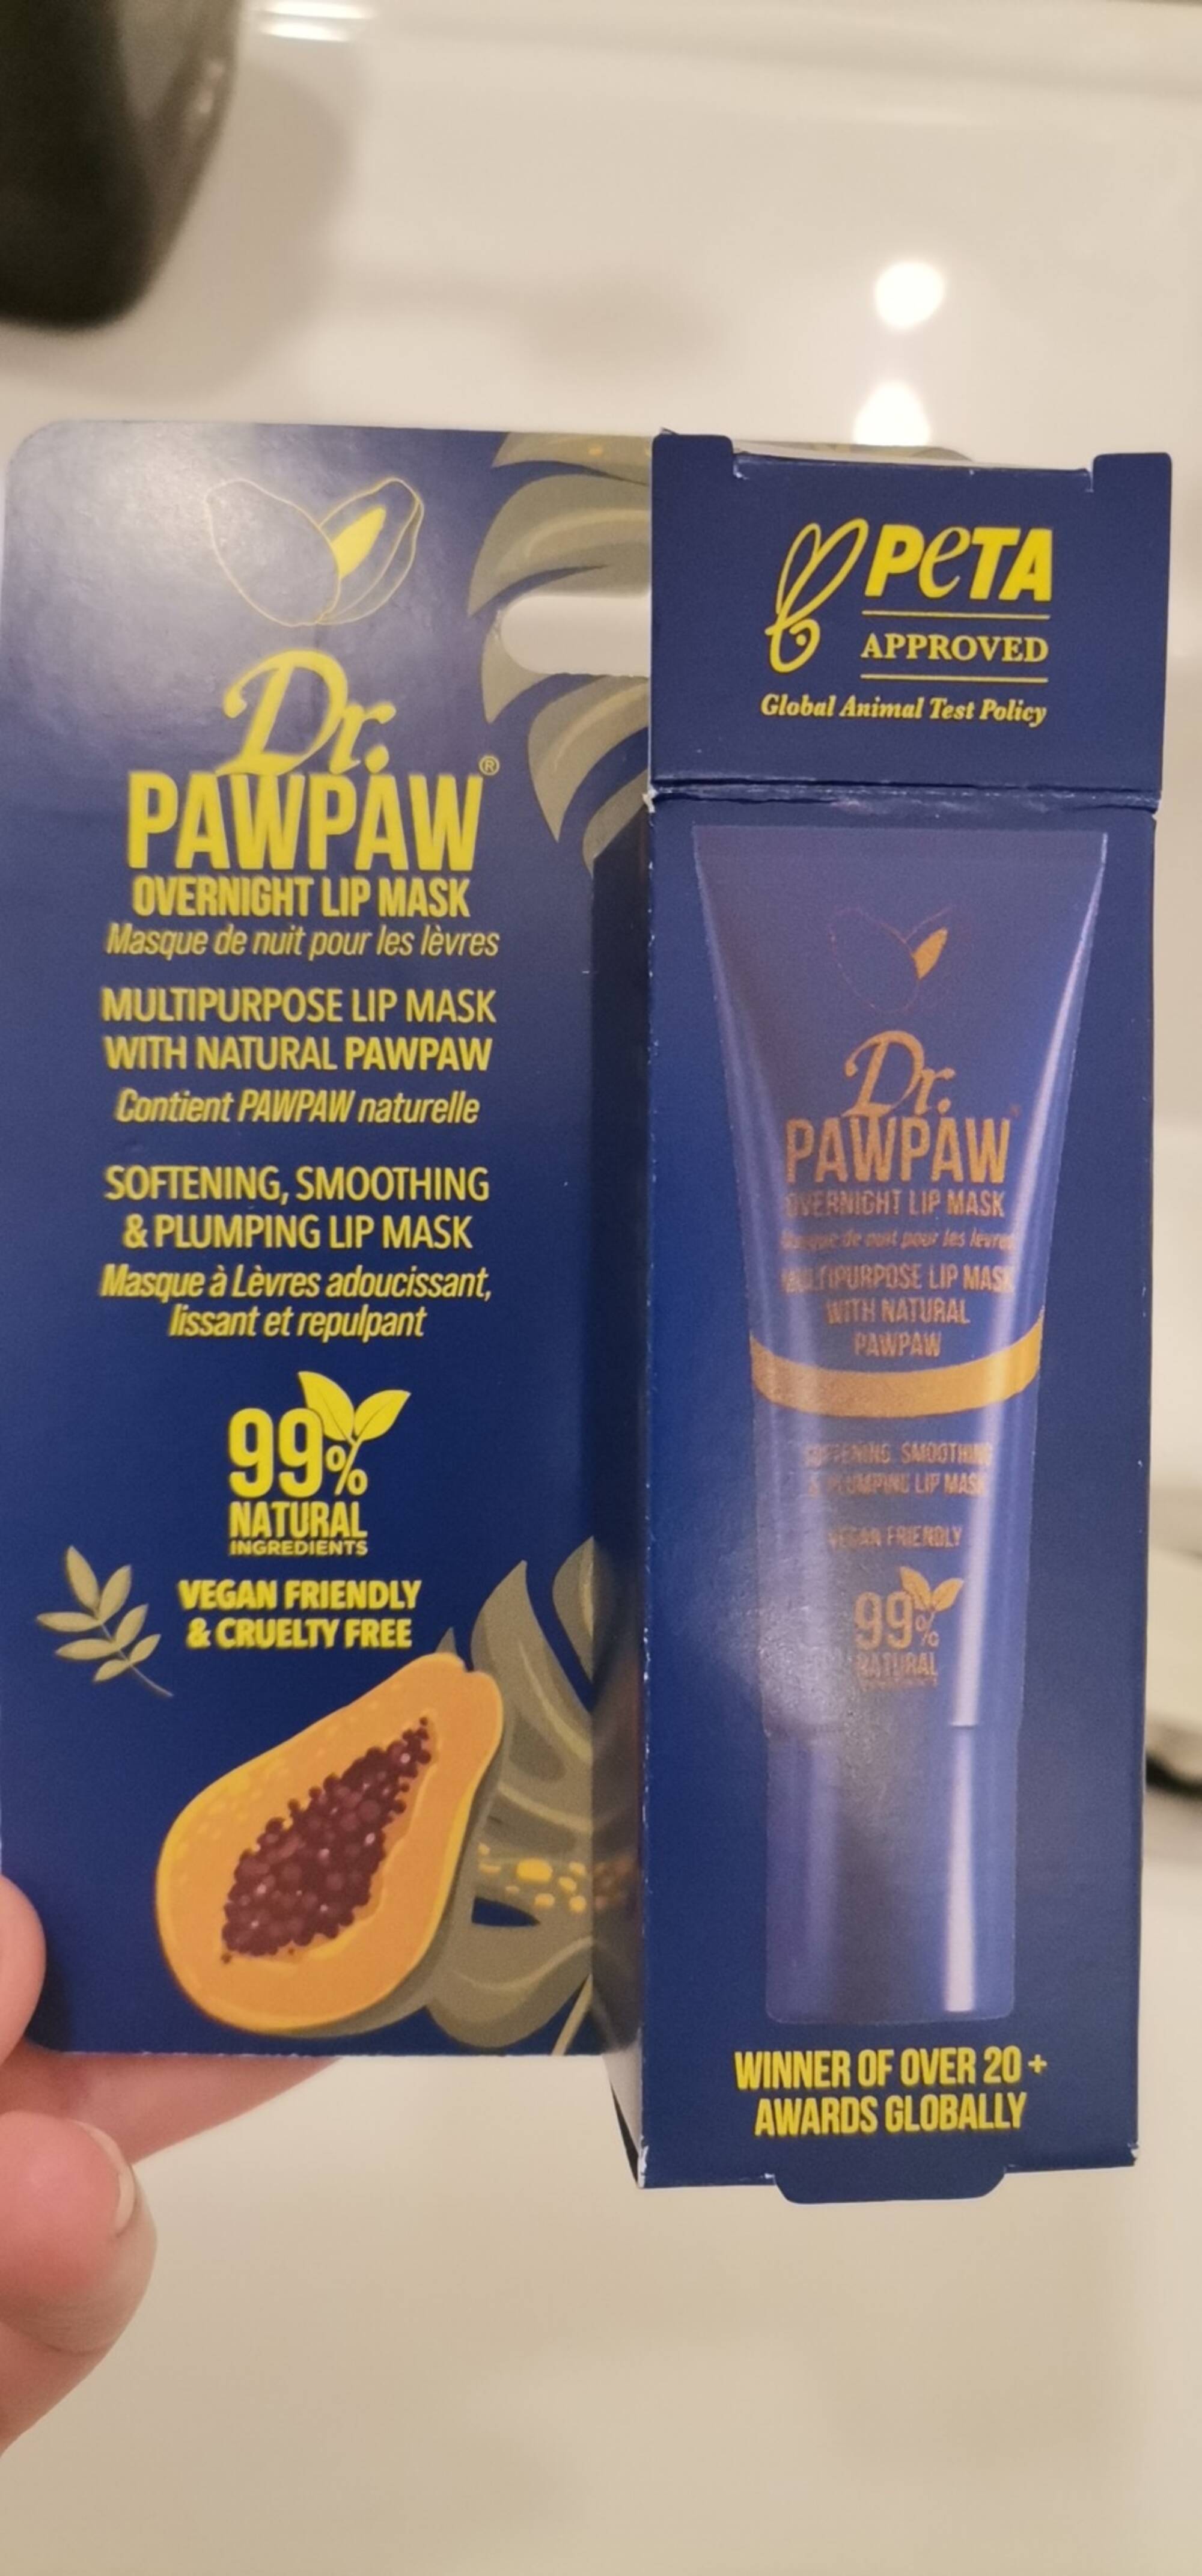 DR PAWPAW - Overnight lip mask